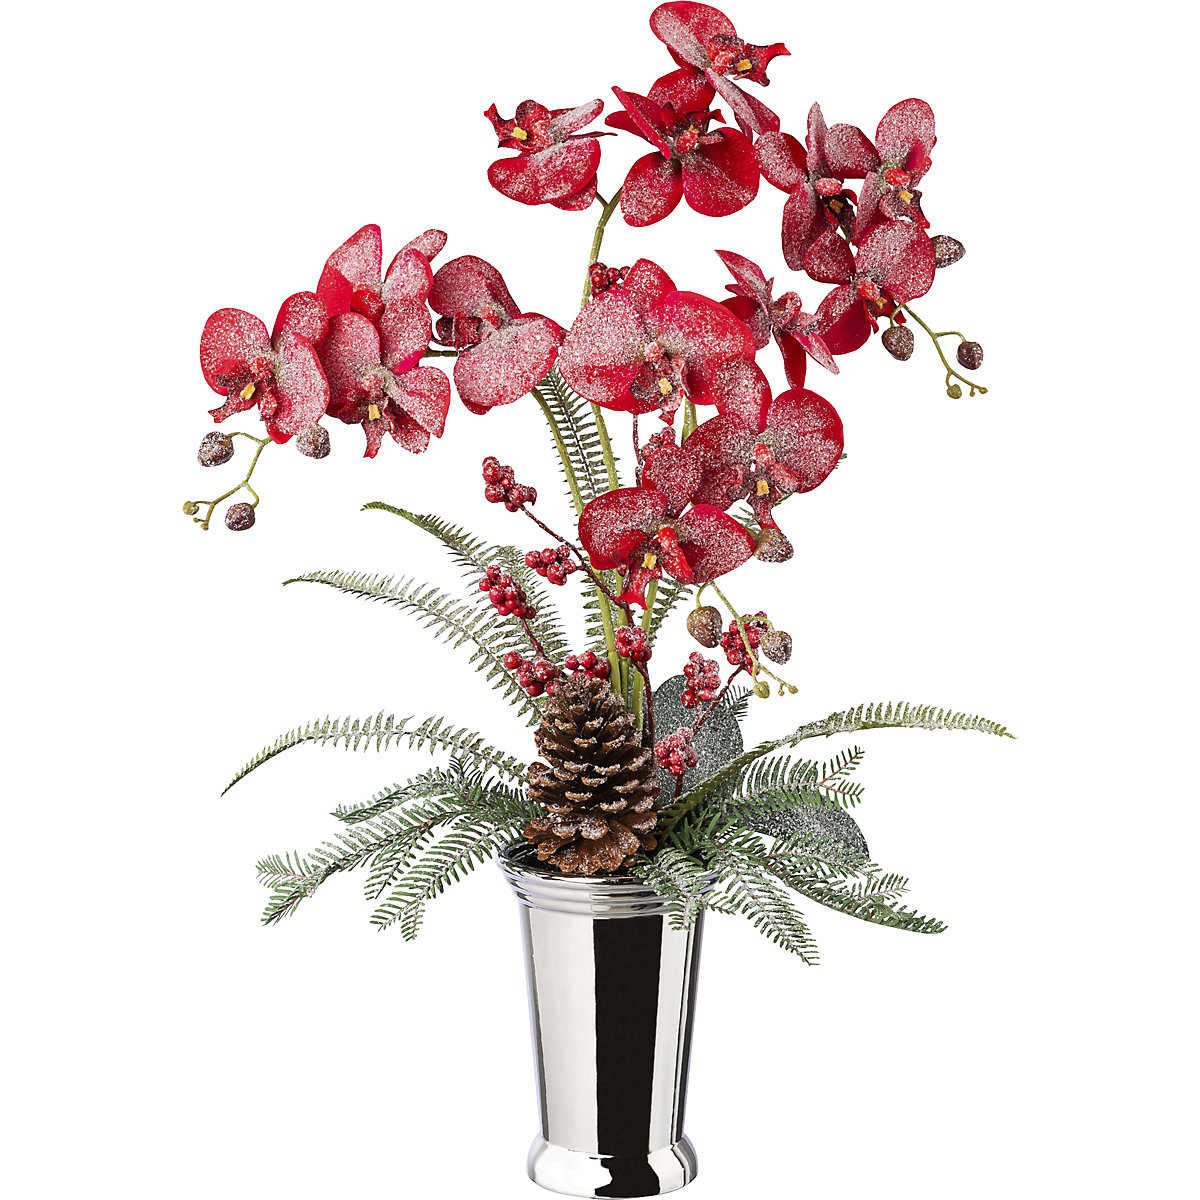 Aranžman Phalaenopsis u keramičkoj vazi